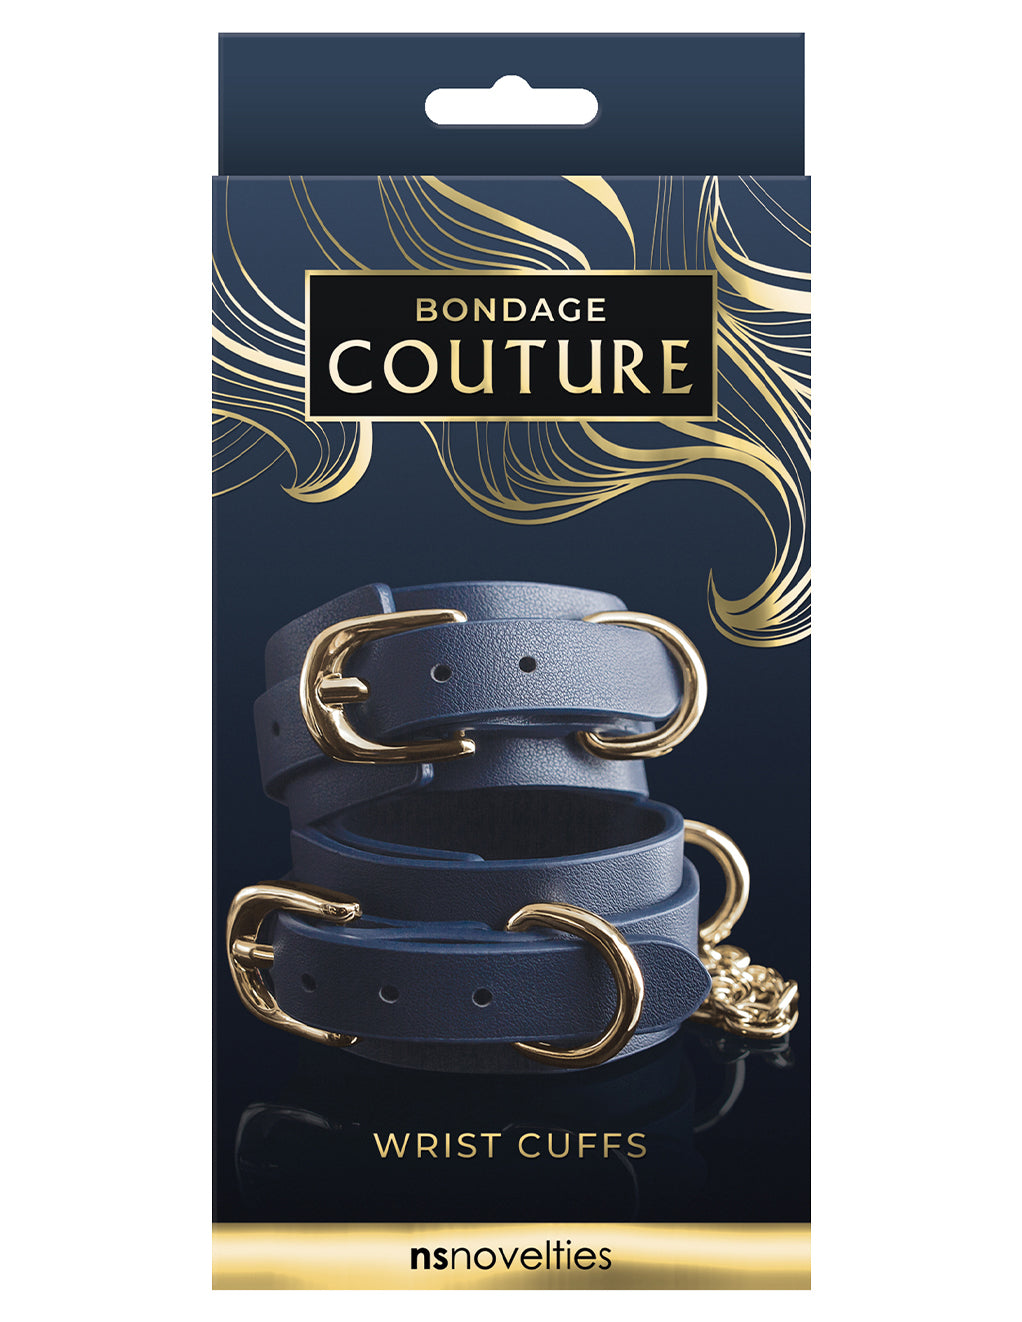 Bondage Couture Wrist Cuffs- Box